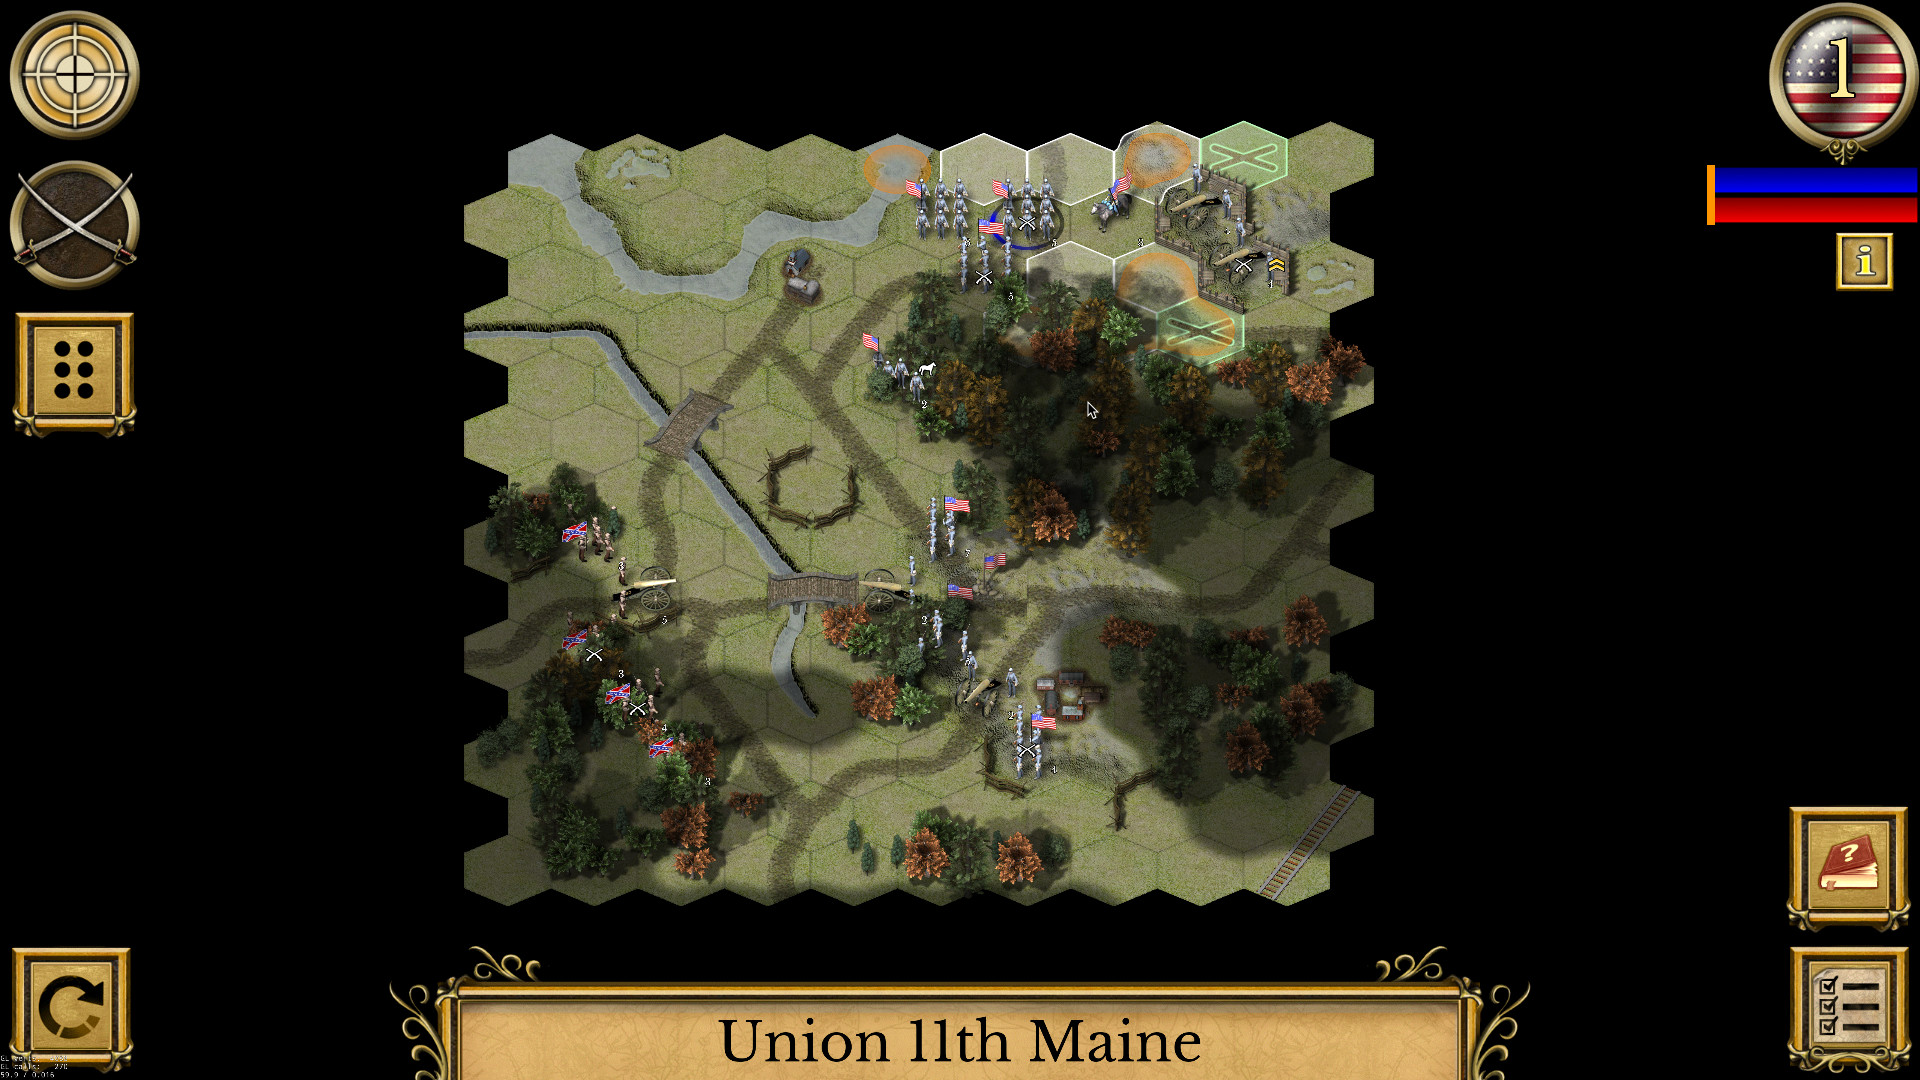 Civil War: 1864 screenshot